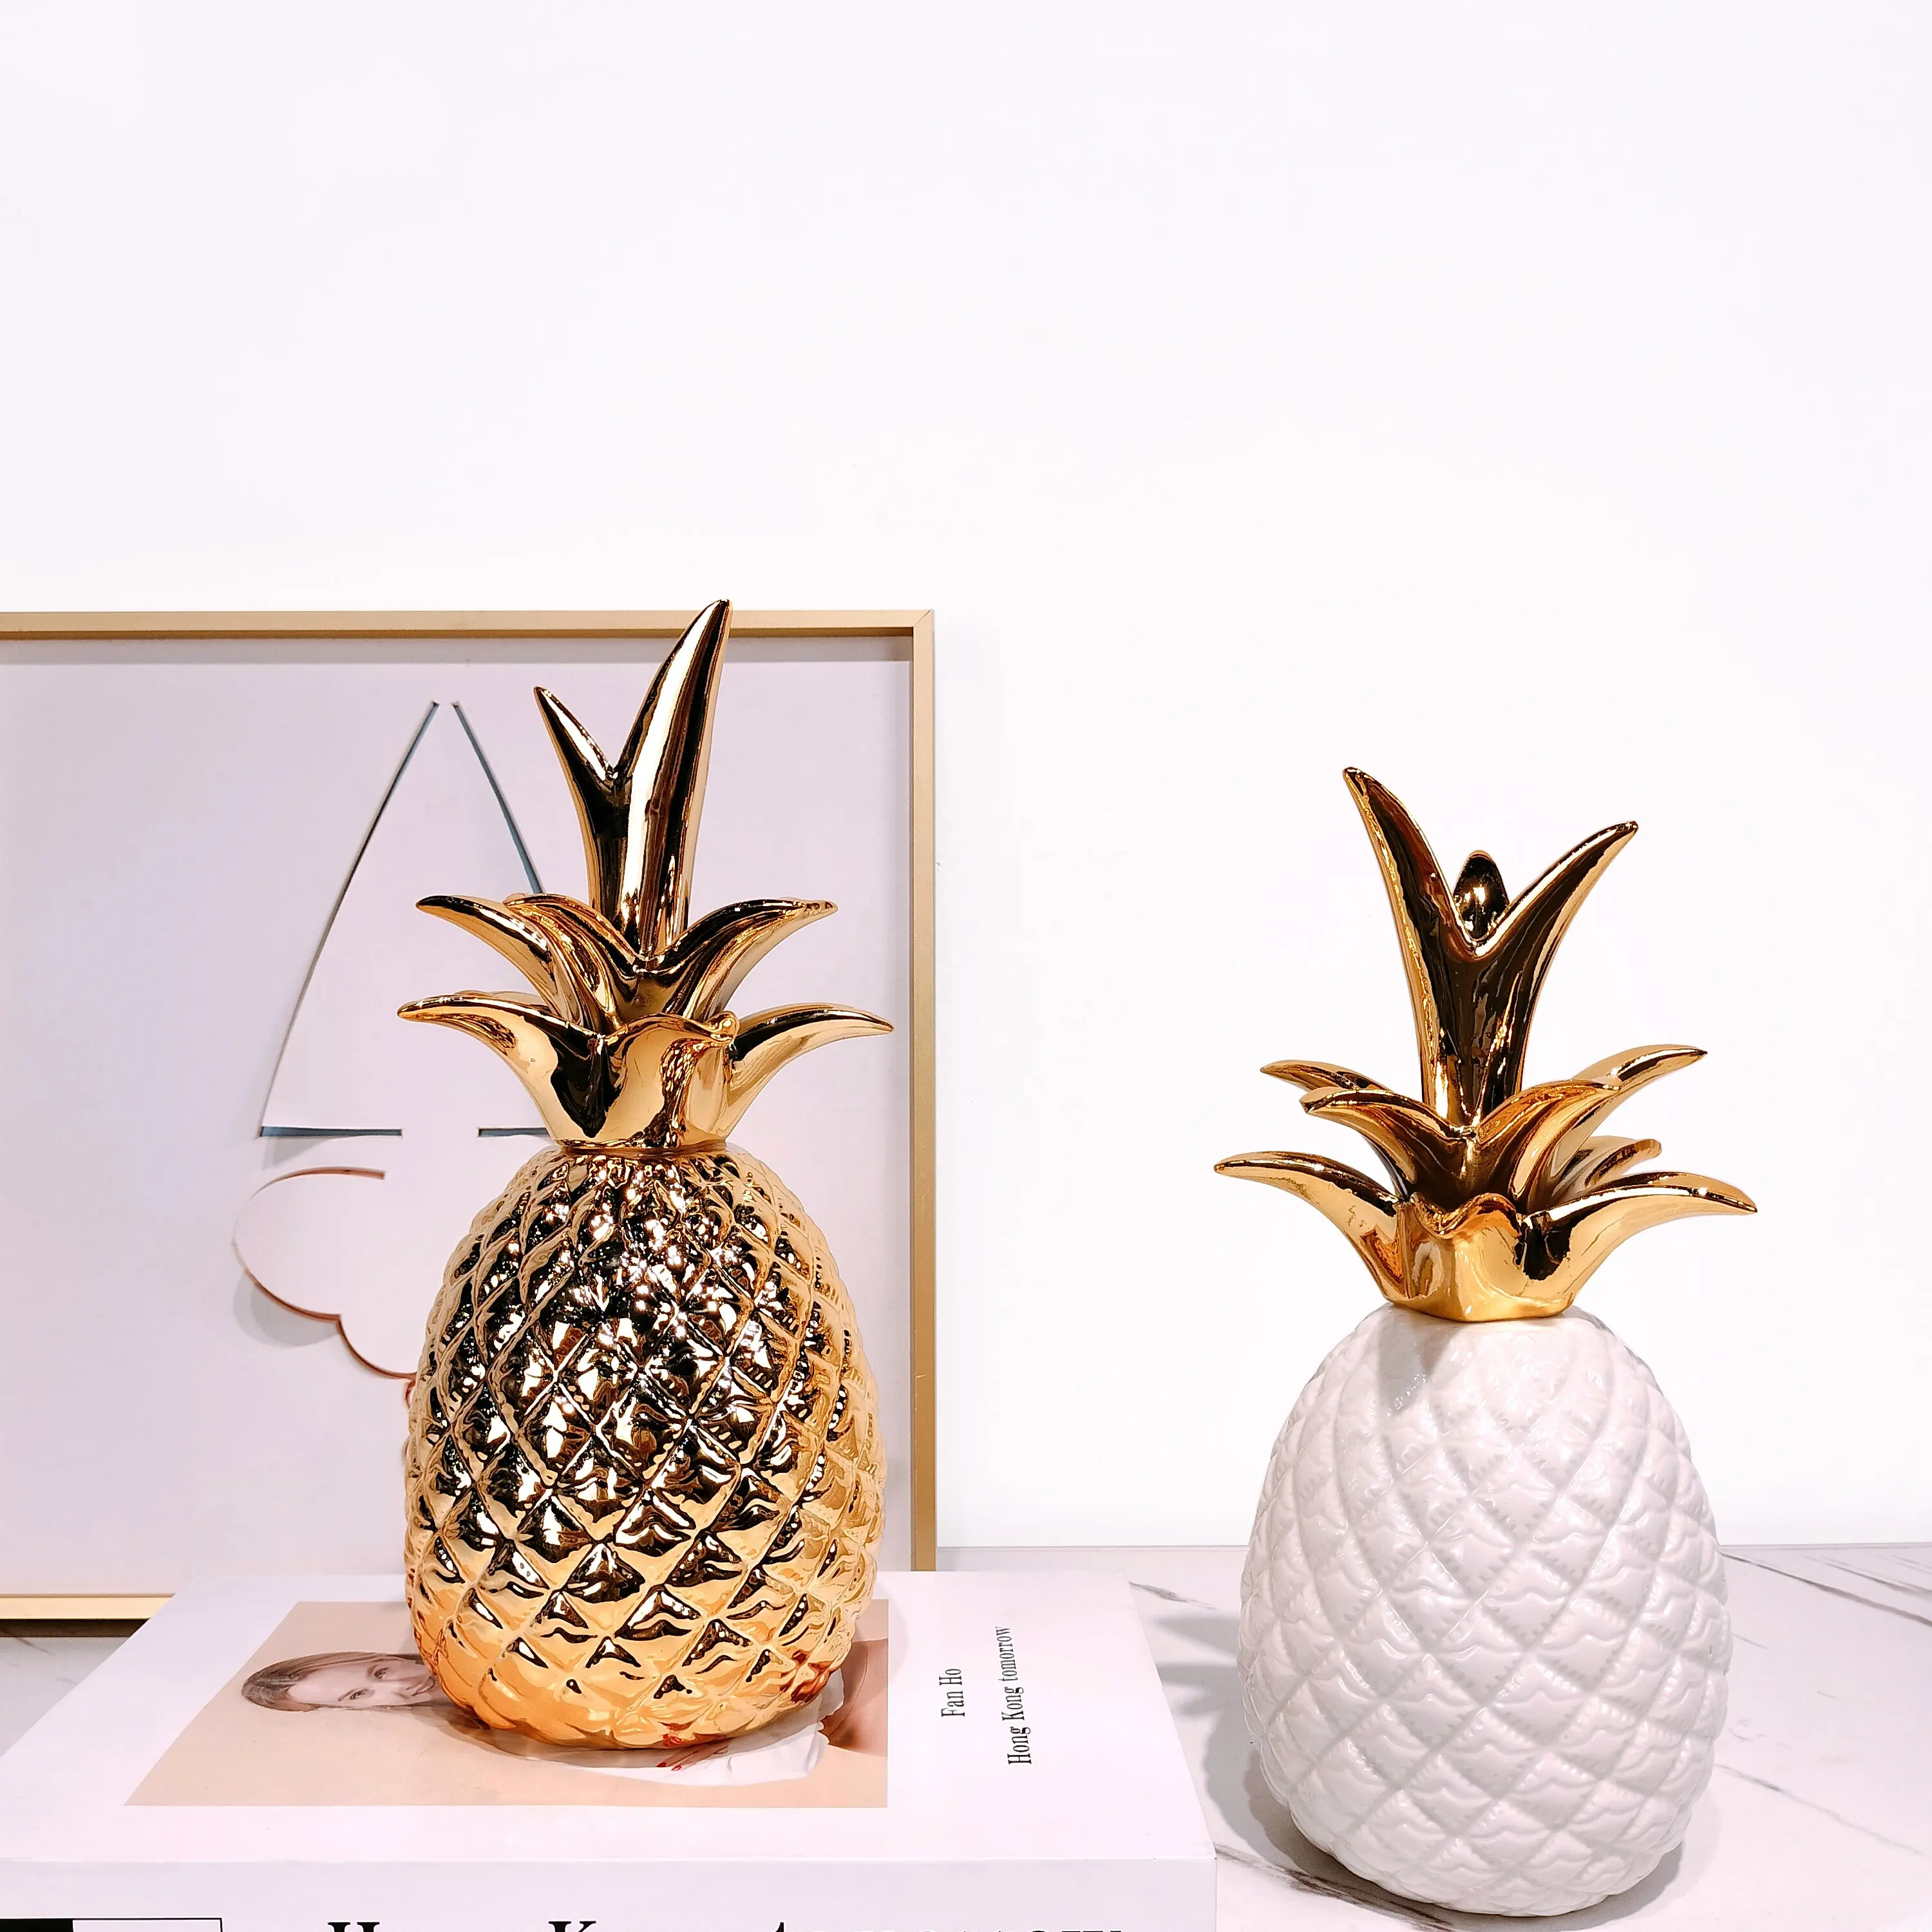 Modern simple light luxury ceramic ornaments wedding hotel pineapple home luxury decor accessories